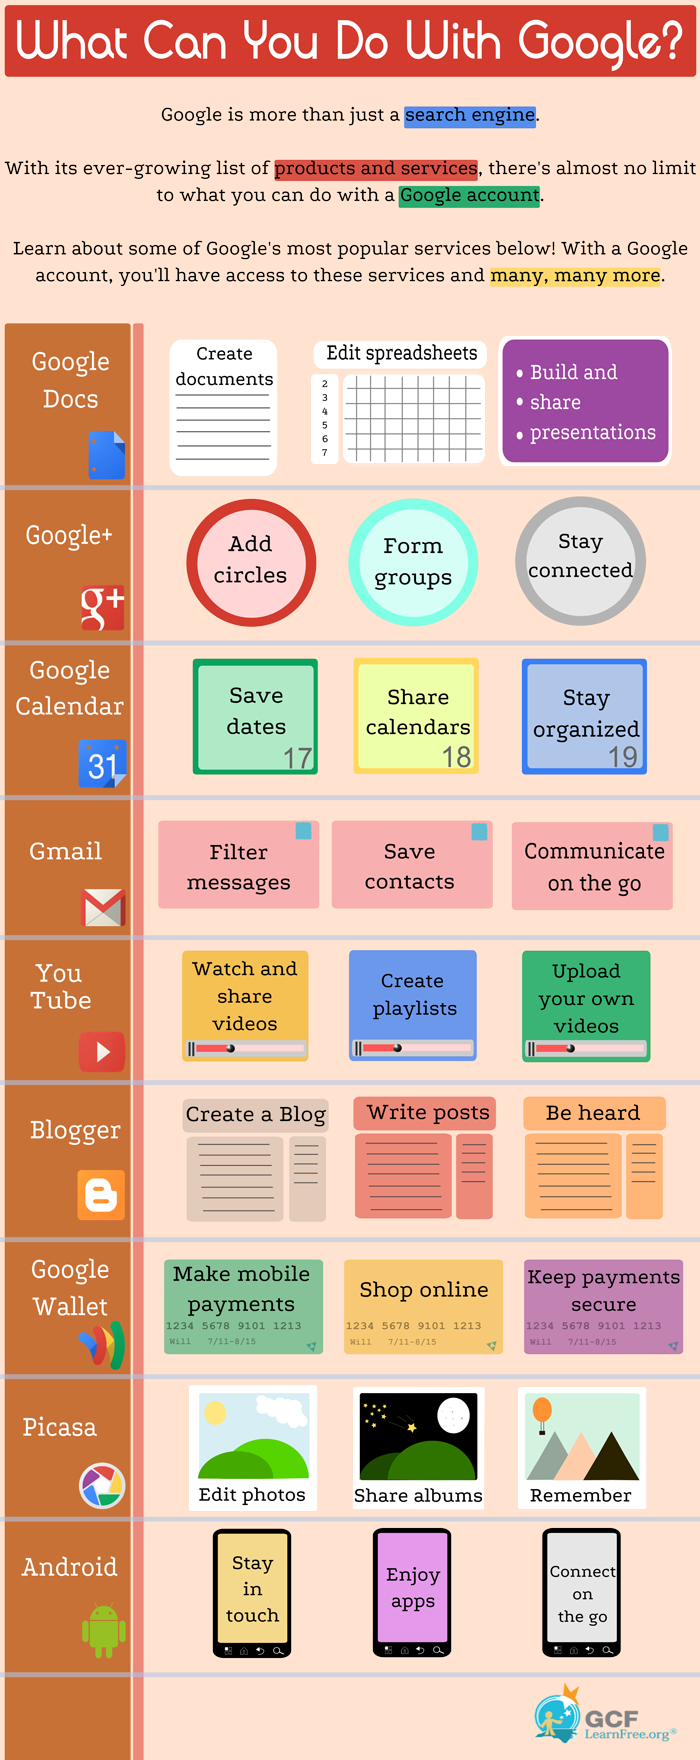 An infographic summarizing Google services